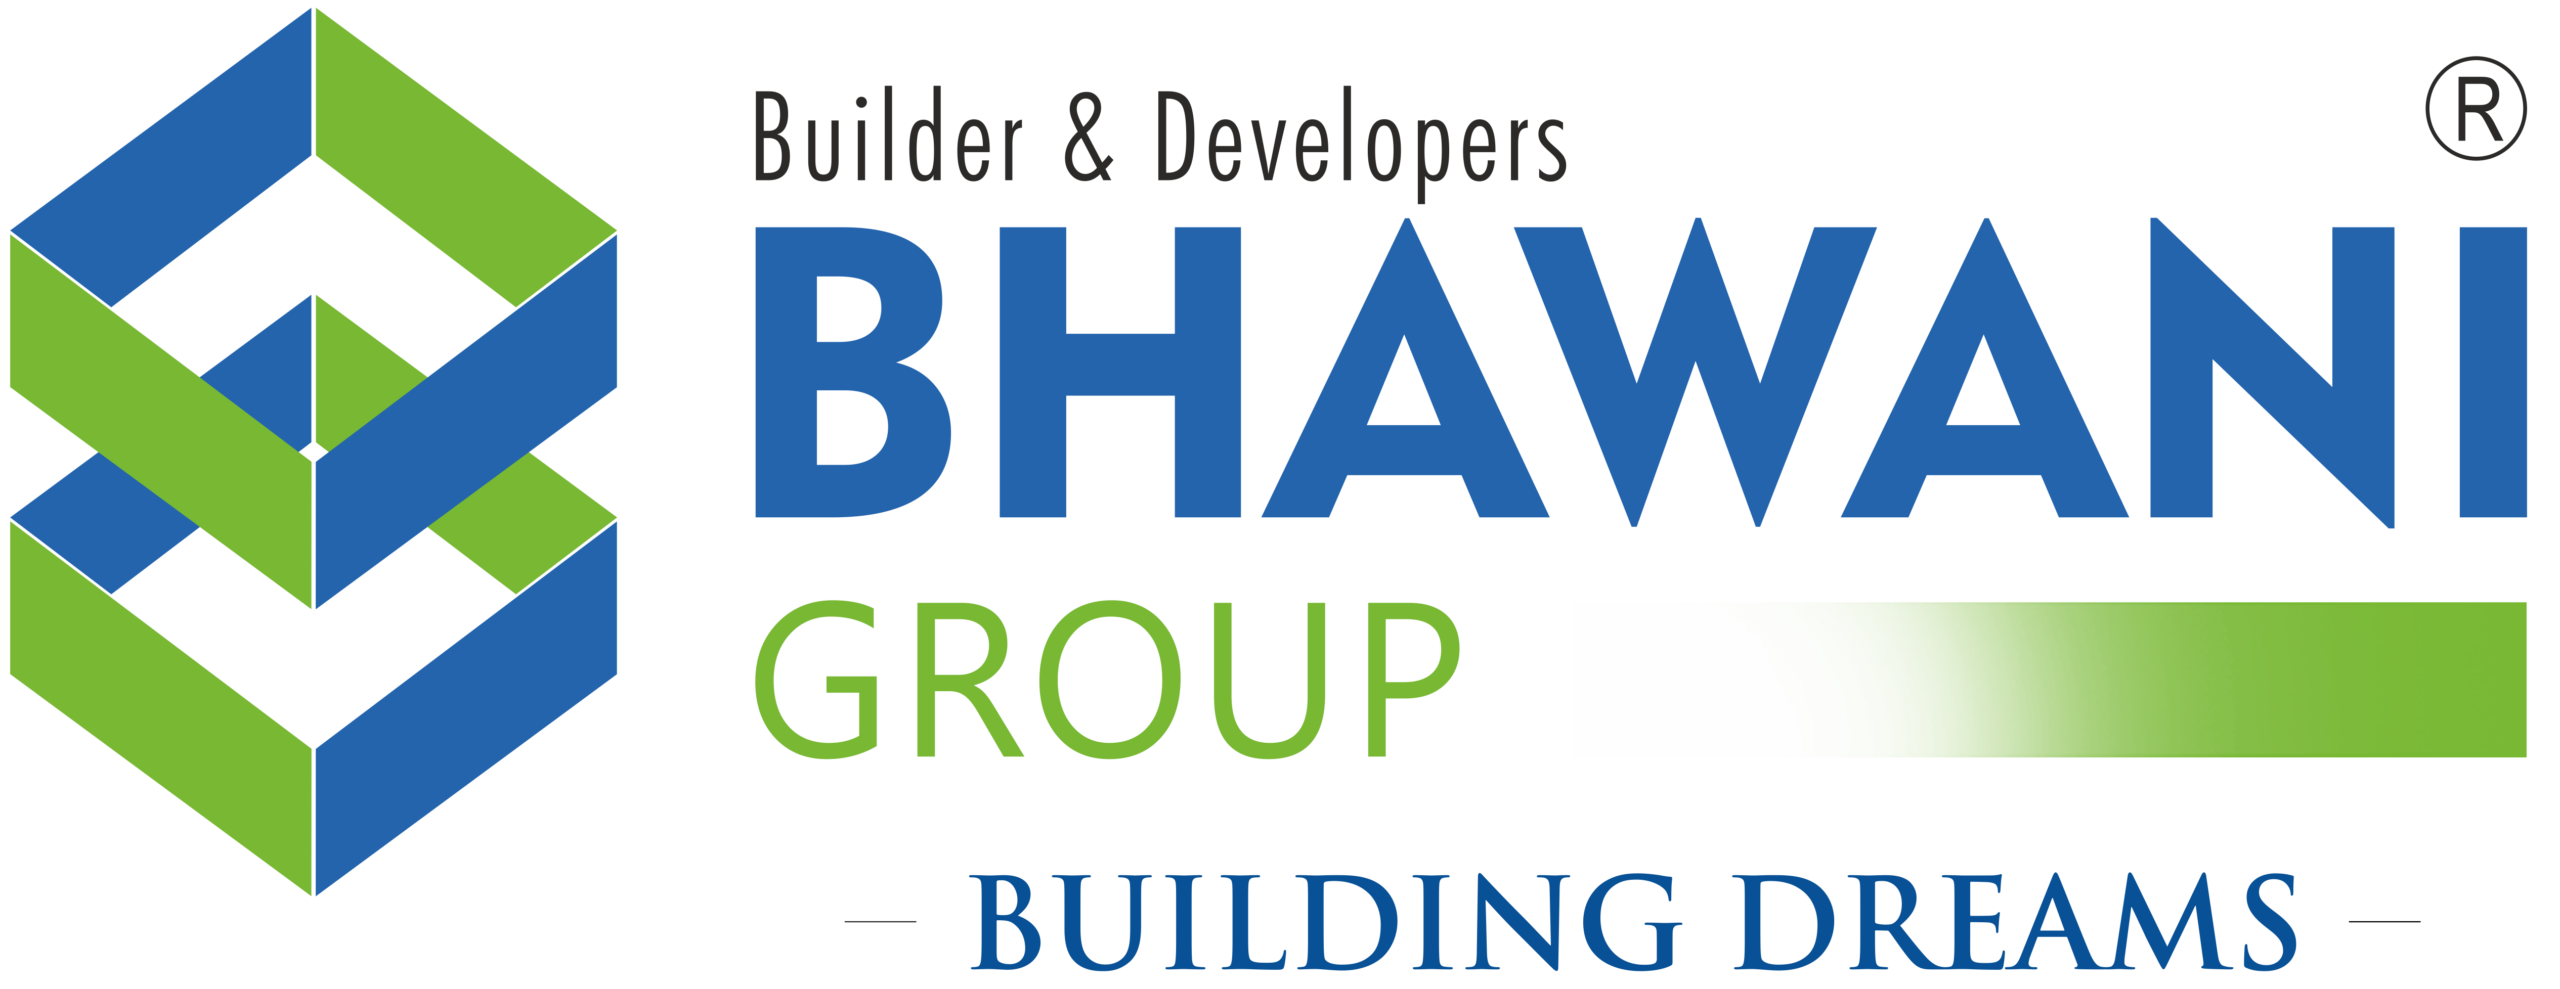 Bhawani Group Logo